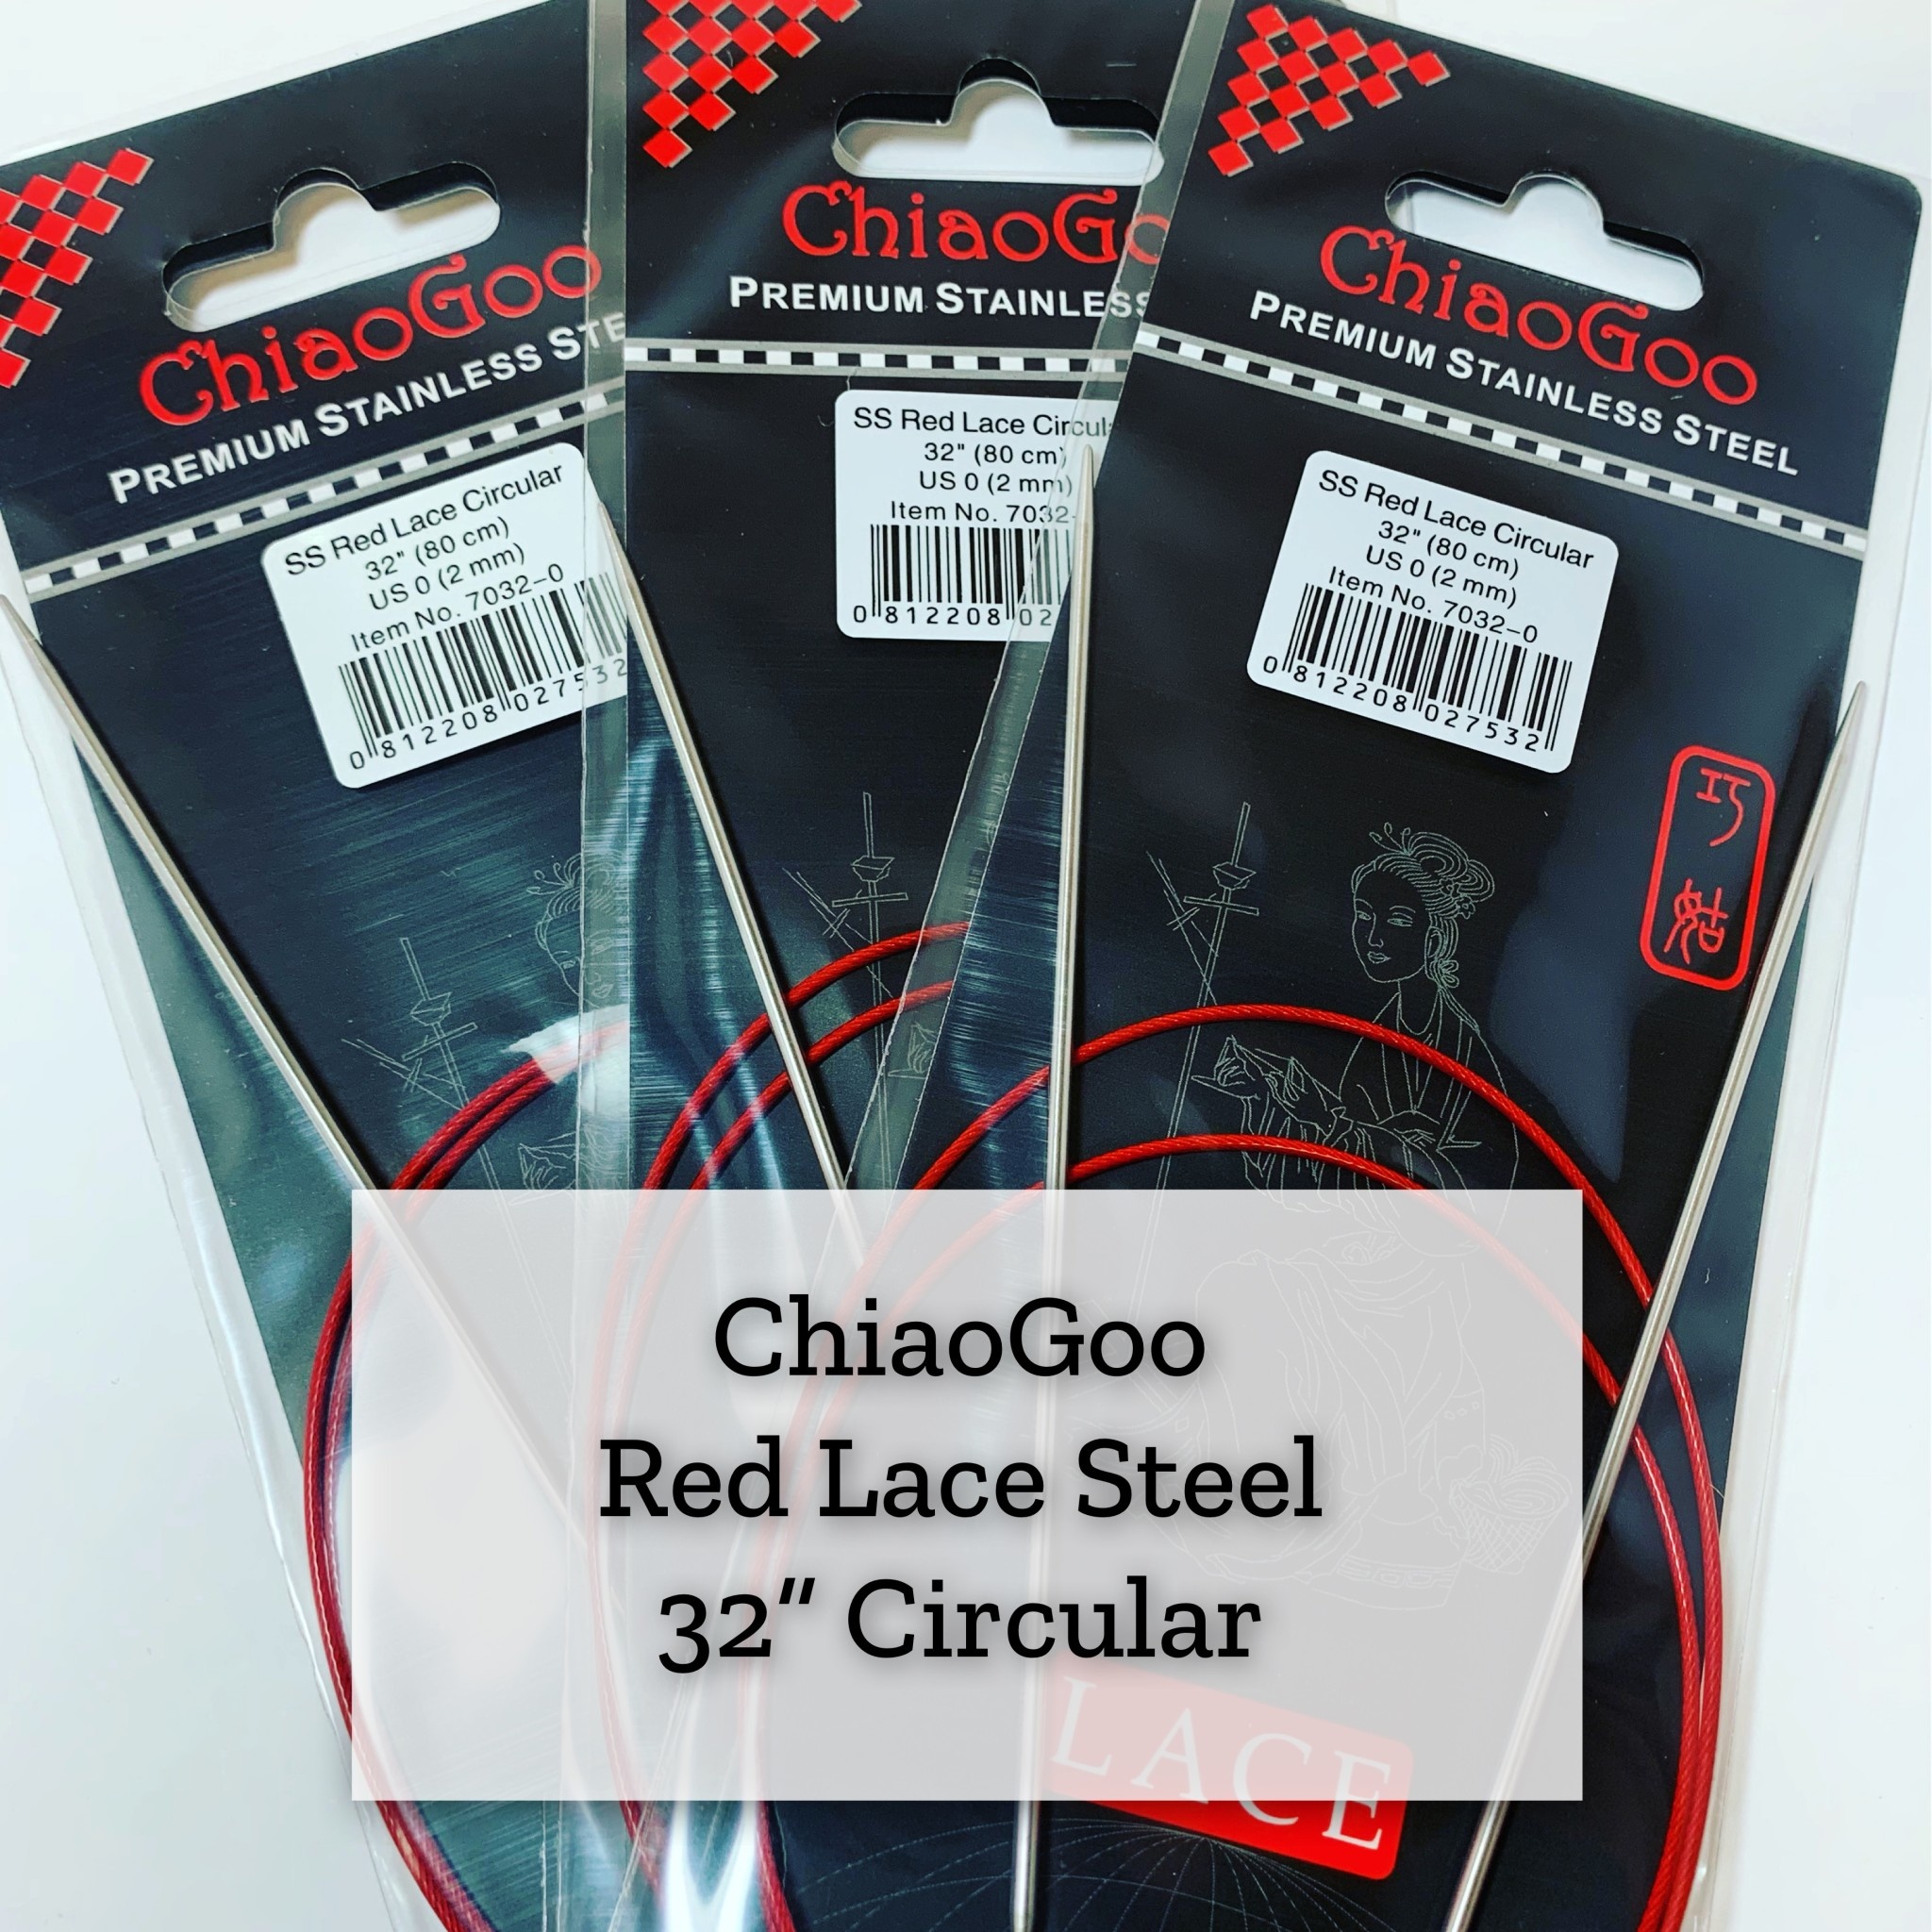 ChiaoGoo Red Lace Steel - 32" 3.25 mm